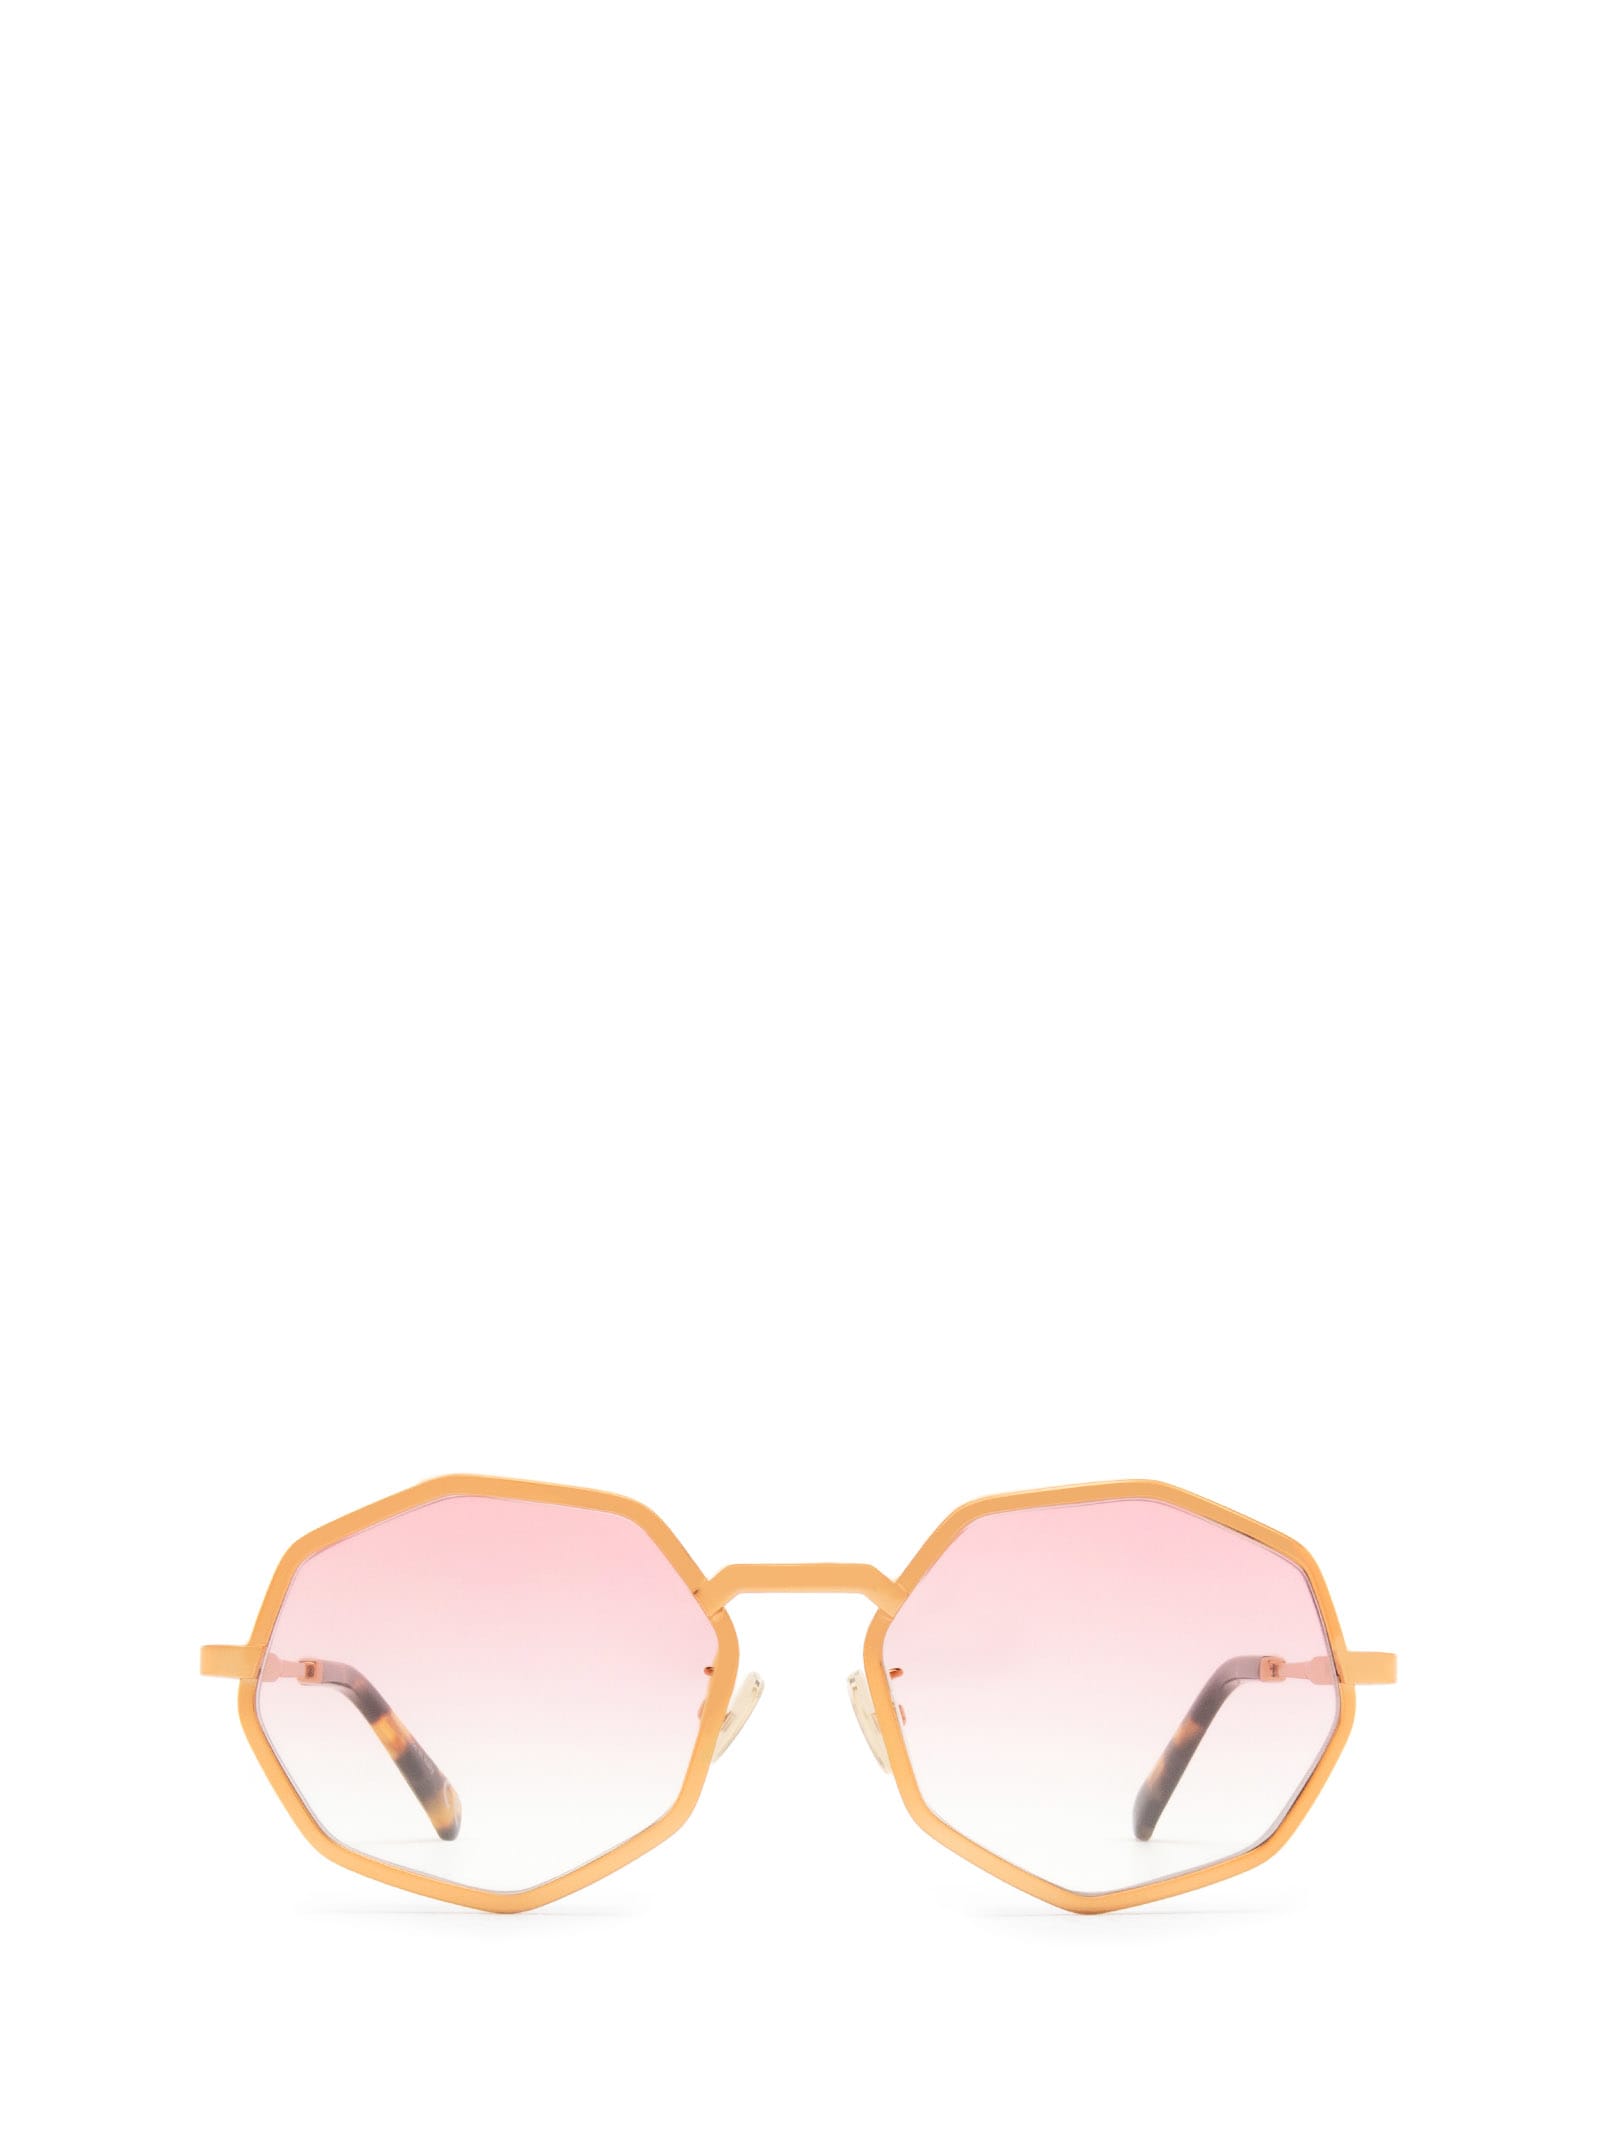 Marni Eyewear Pulpit Rock Pink Sunglasses